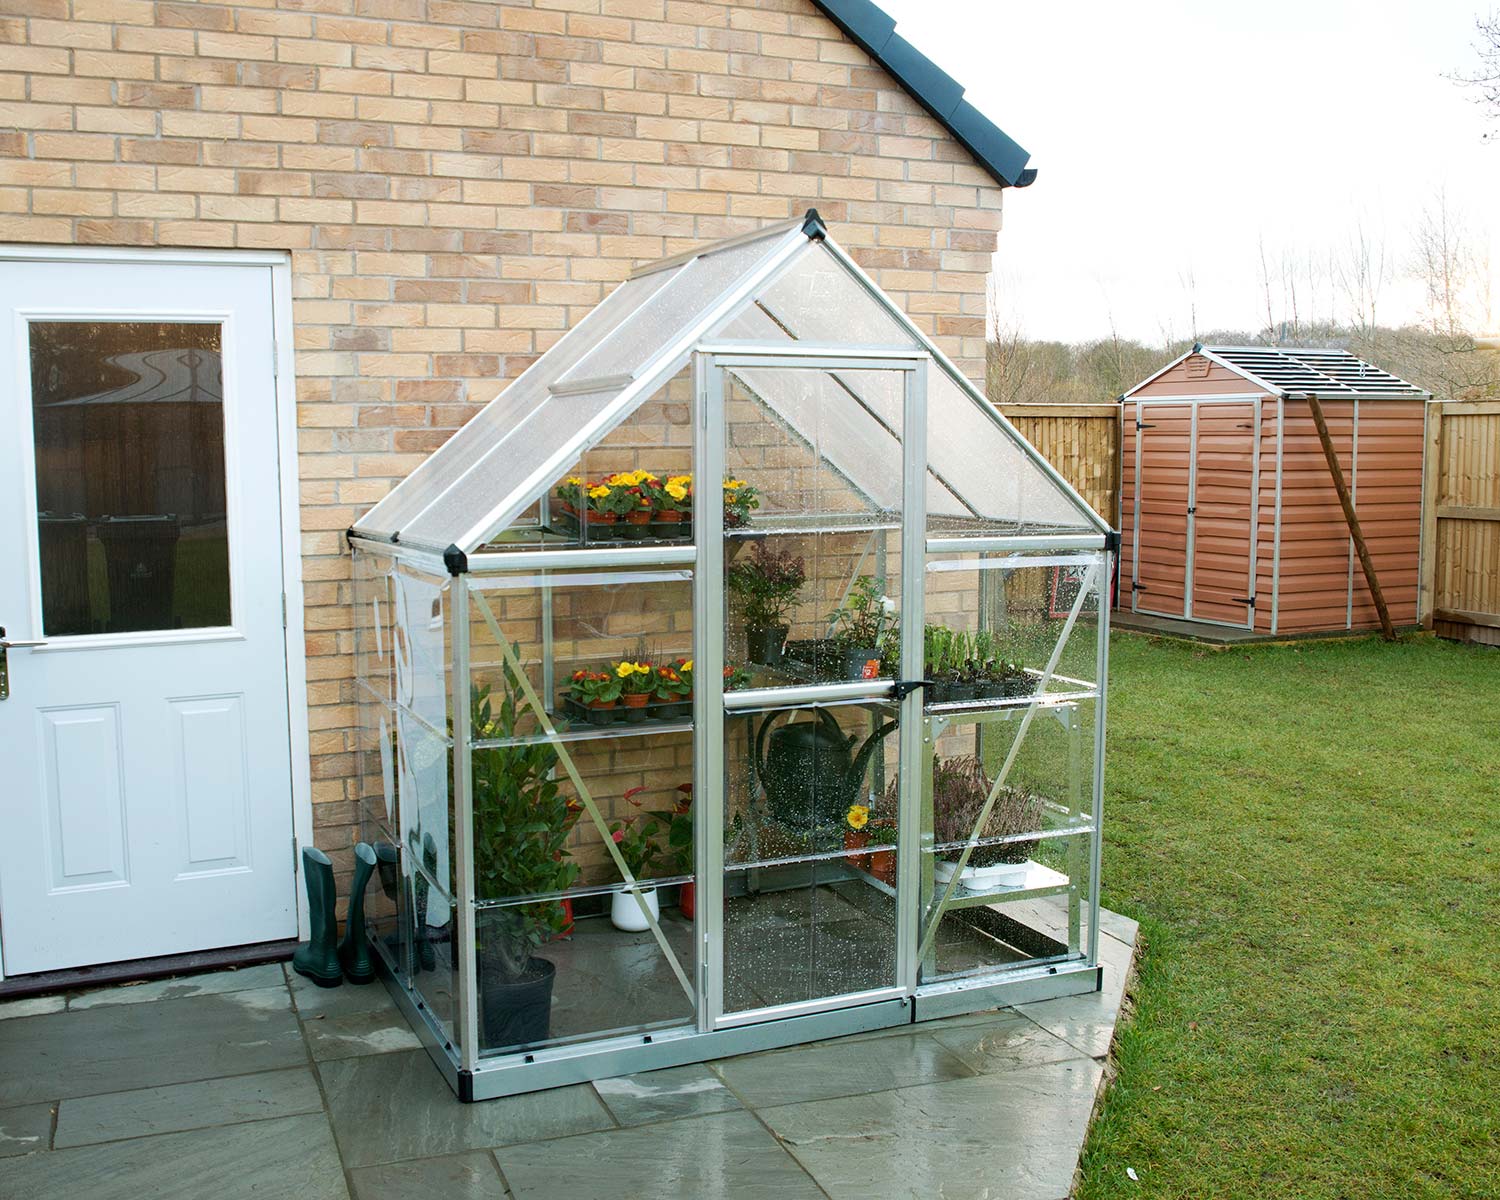 Greenhouse Hybrid 6&#039; x 4&#039; Kit - Silver Structure &amp; Hybrid Glazing